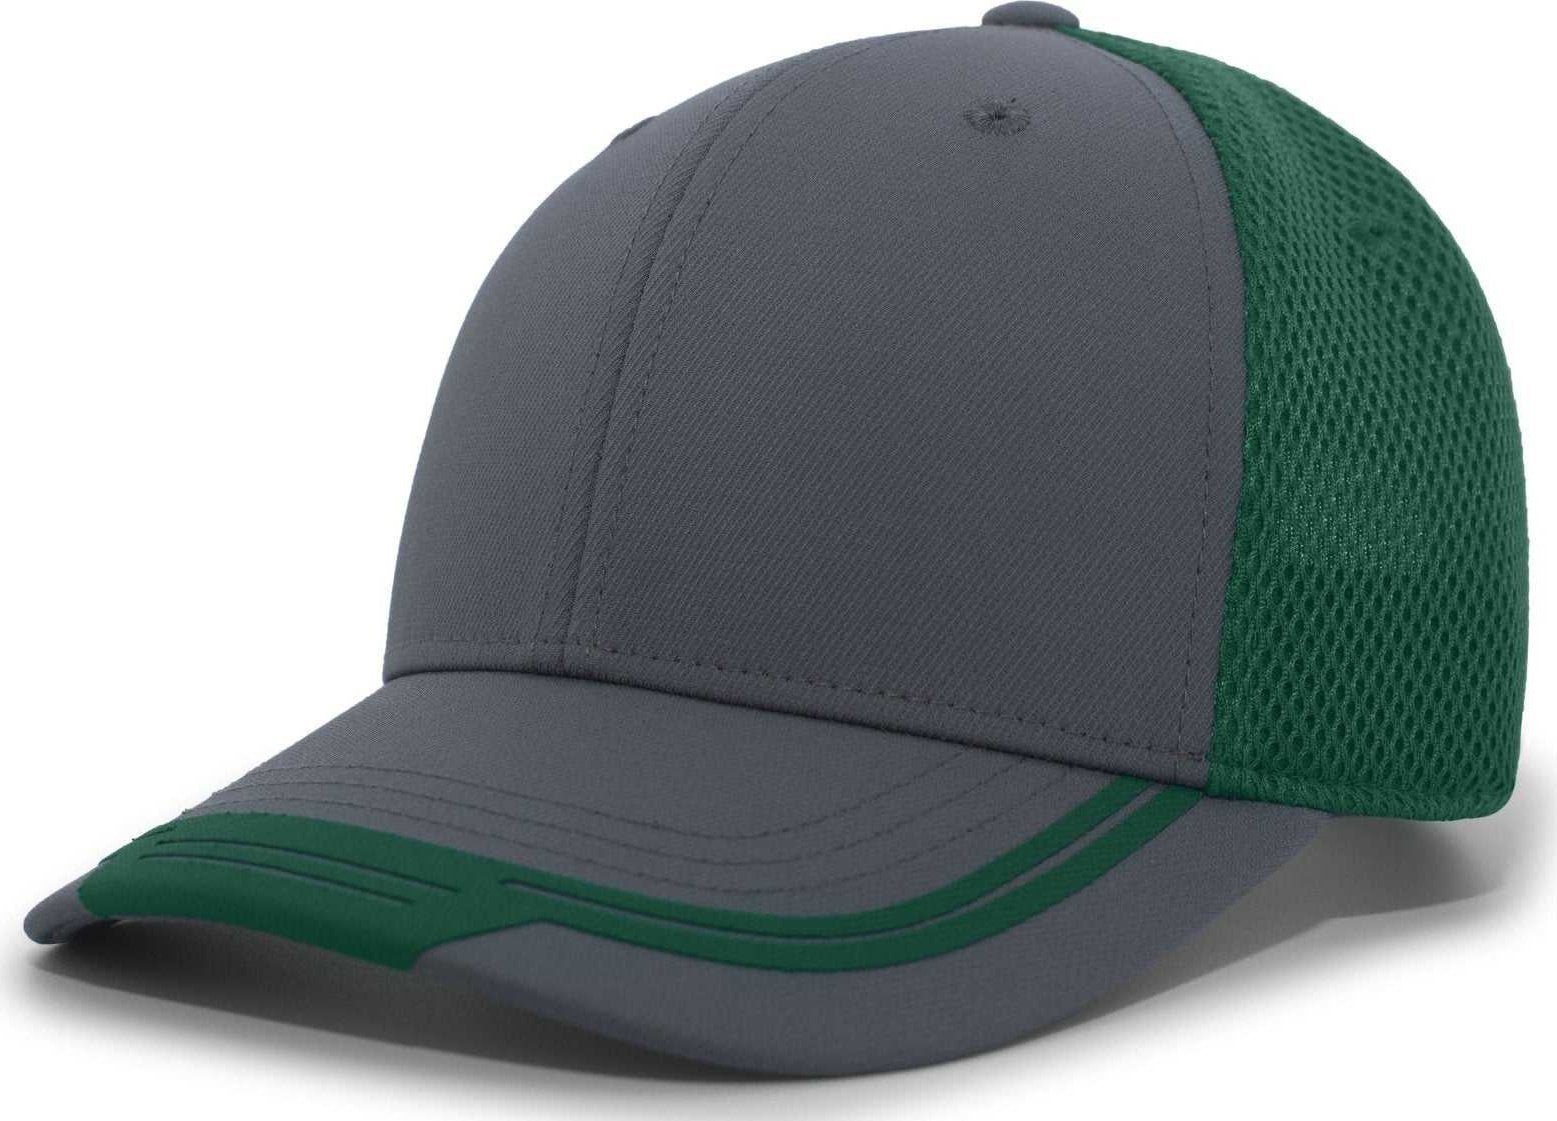 Pacific Headwear P301 Welded Sideline Cap - Carbon Dark Green Carbon - HIT a Double